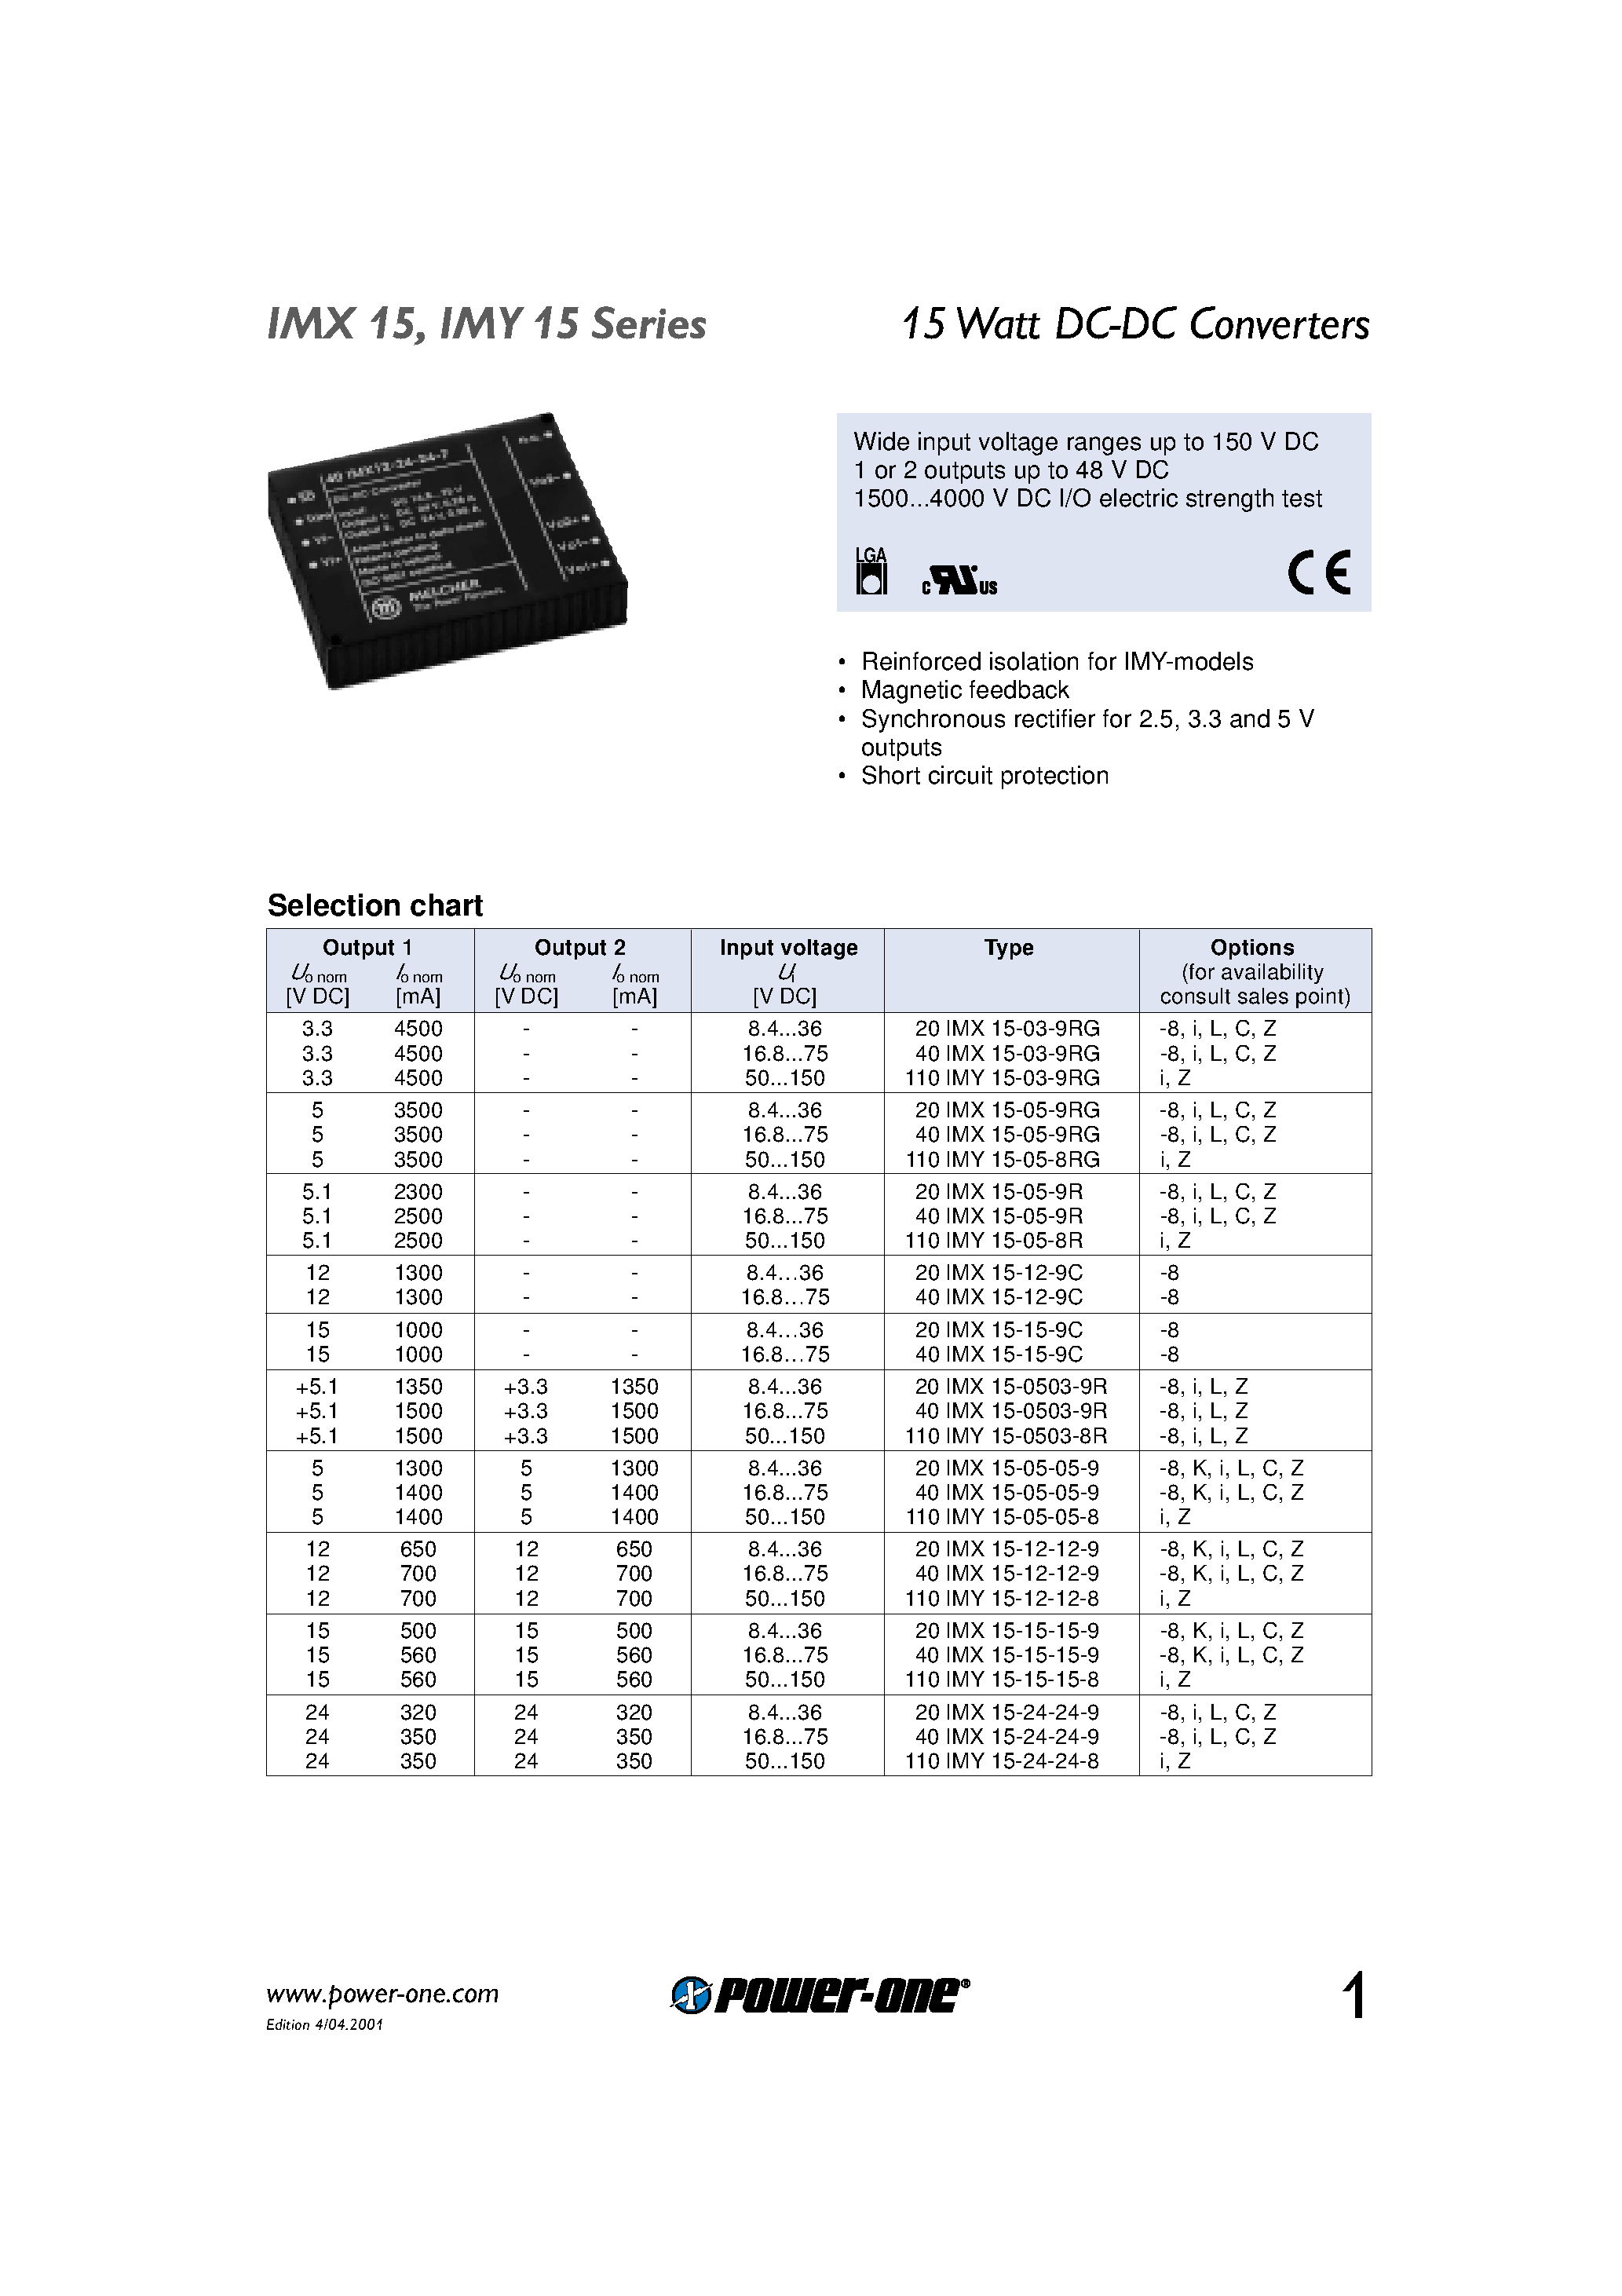 Datasheet 40IMX15-05-05-9 - 15 Watt DC-DC Converters page 1